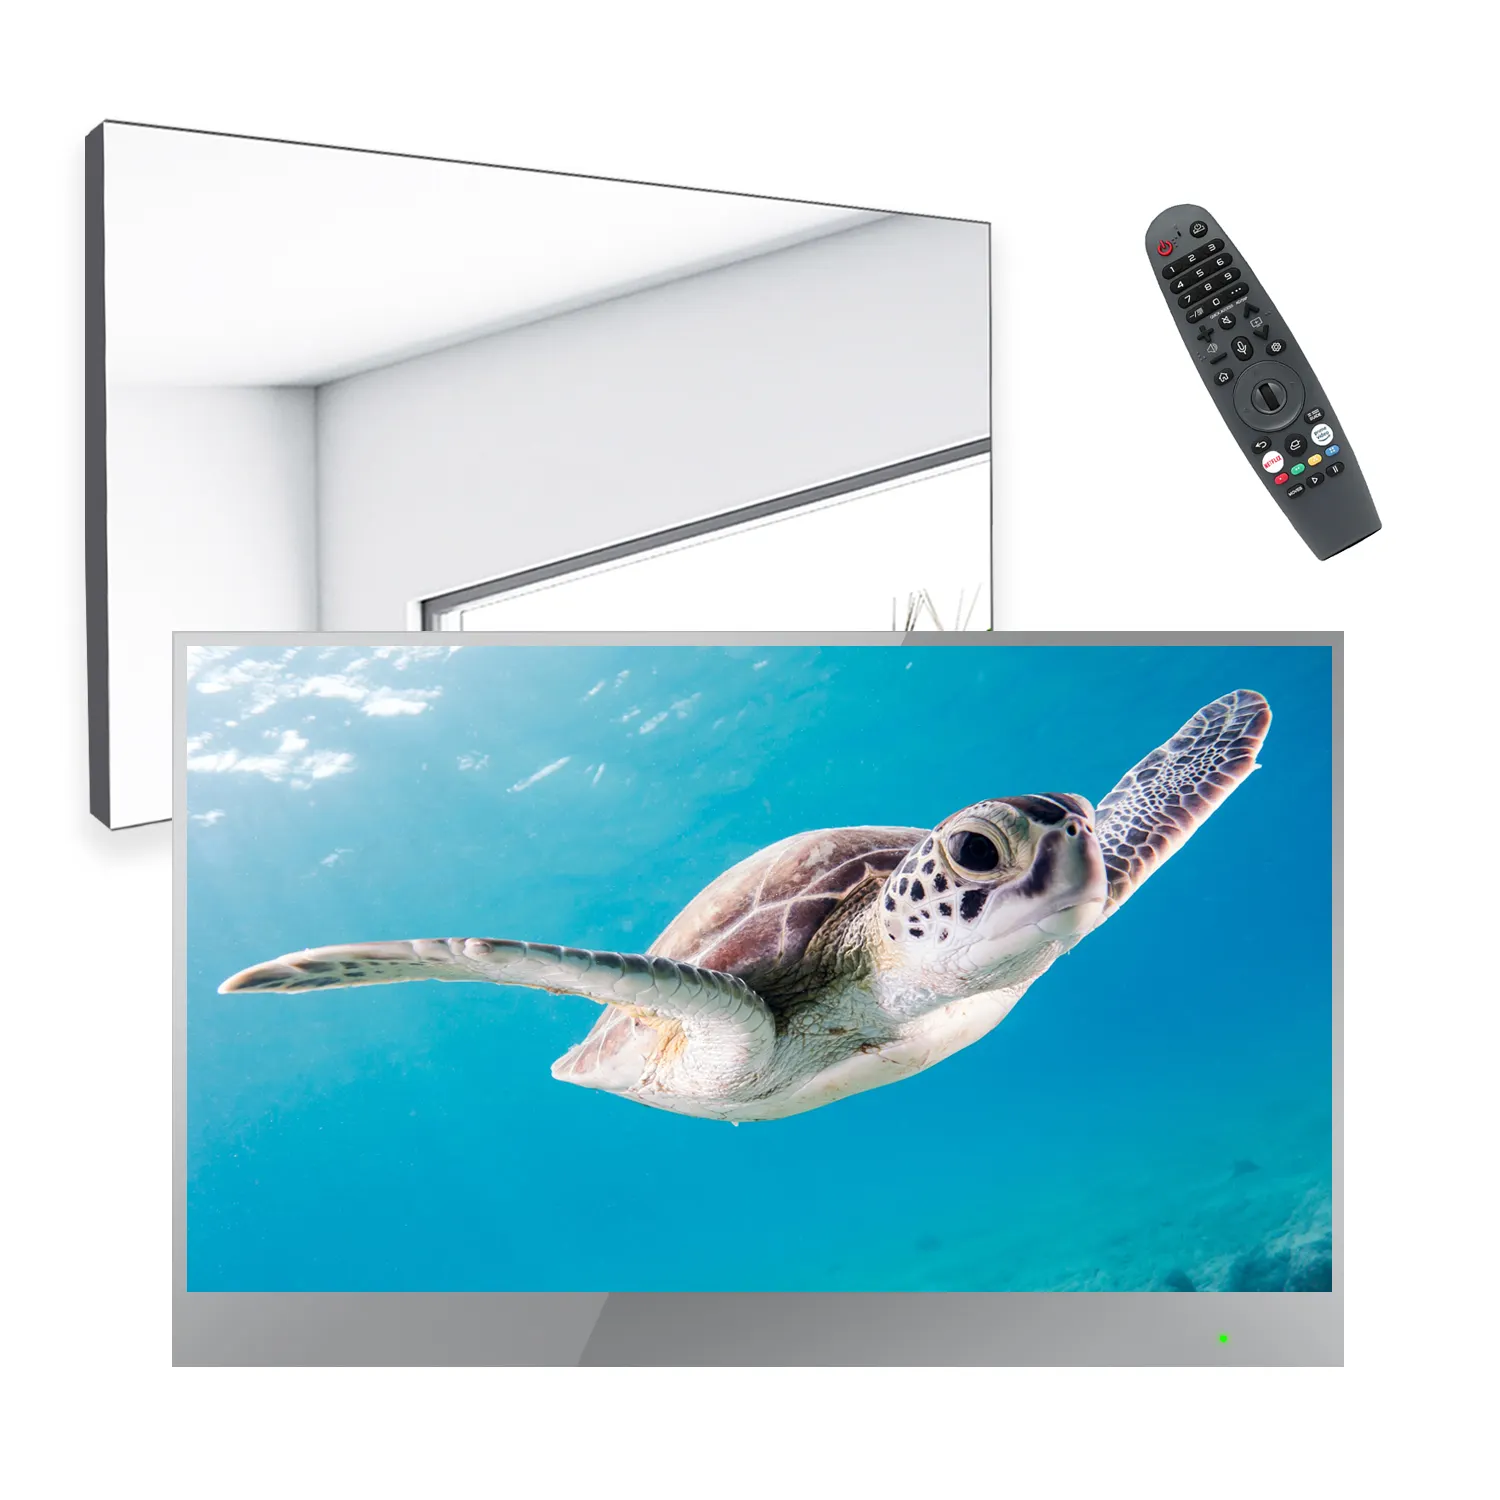 Soulaca 22 "IP65防水キッチンインテリアLCD TV、Freeview Play、内蔵スピーカー、Wi-Fi